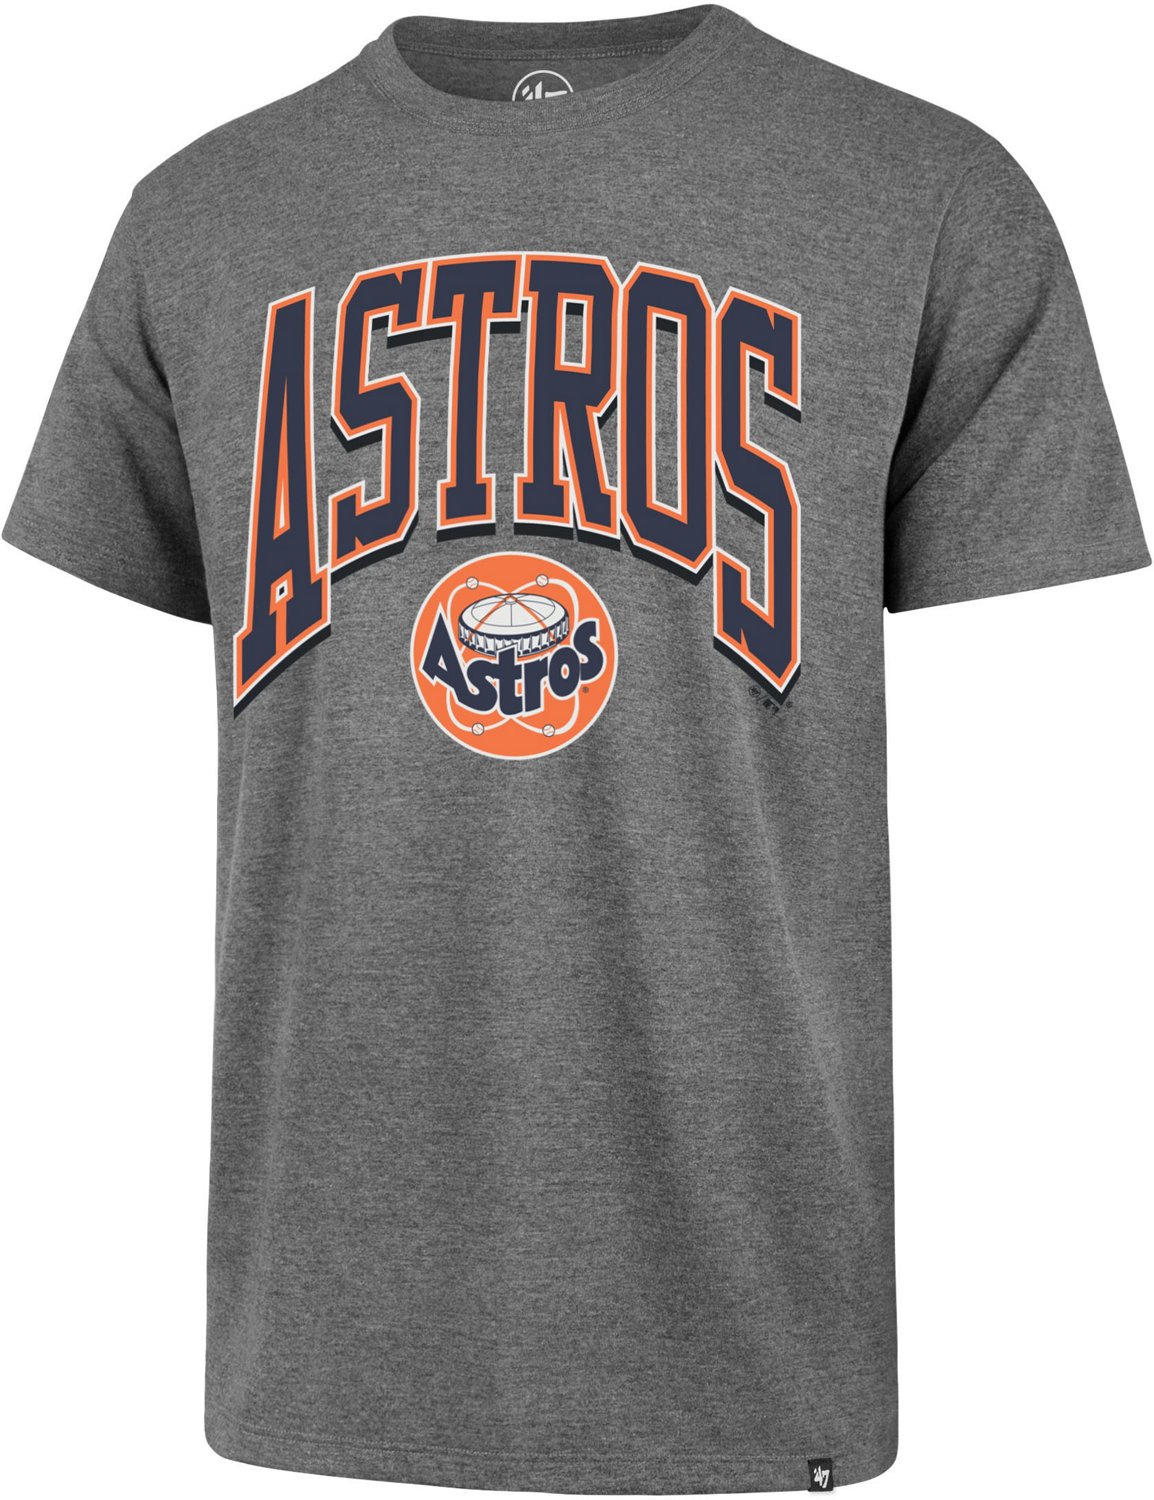 FREE shipping Houston Astros H-Town MLB Vintage Shirt, Unisex tee